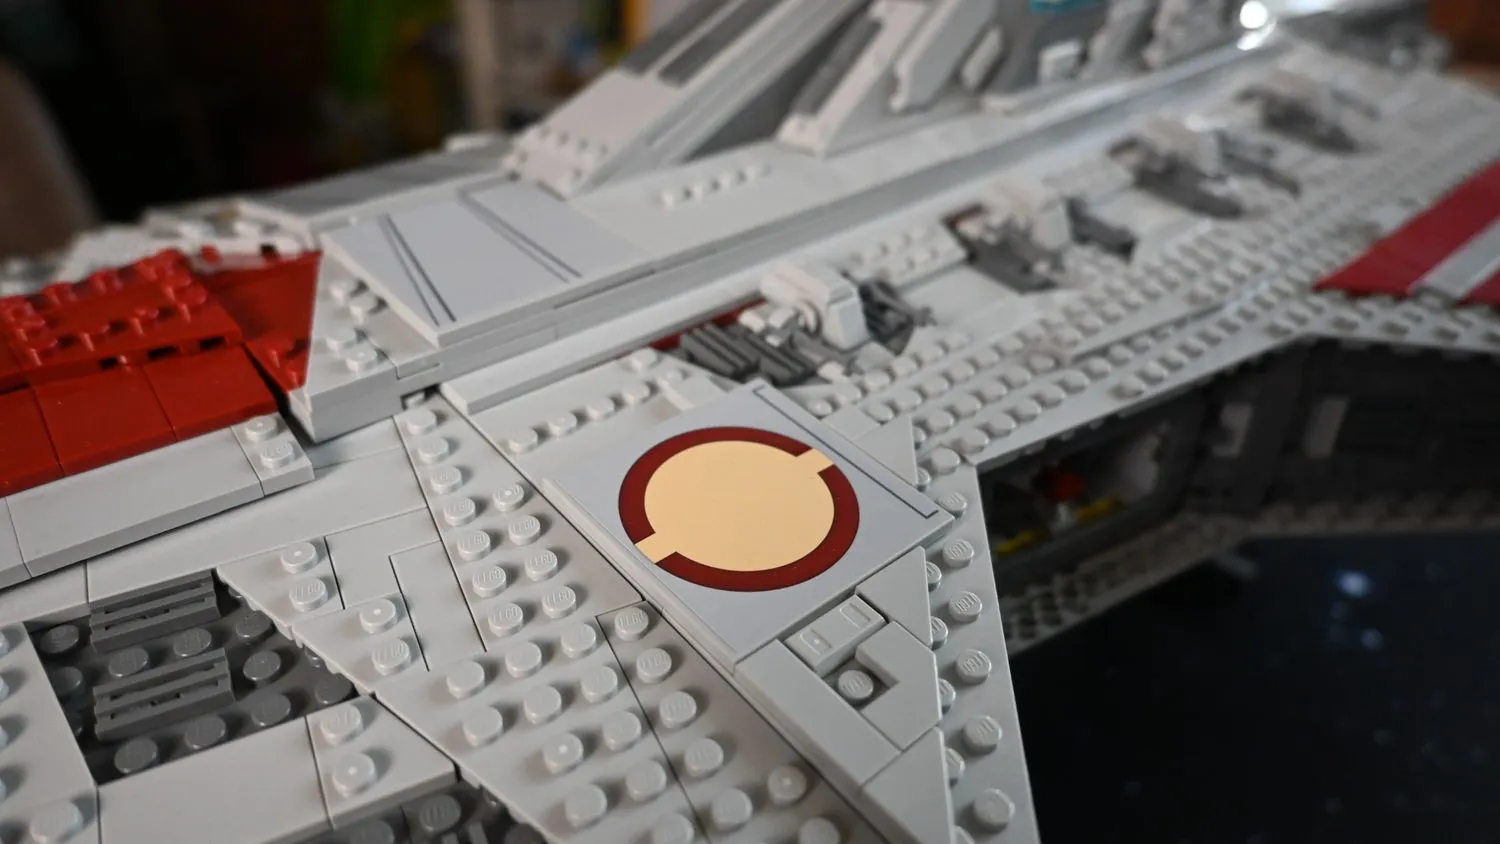 Bild des Lego Star Wars Venator-Class Republic Attack Cruiser.